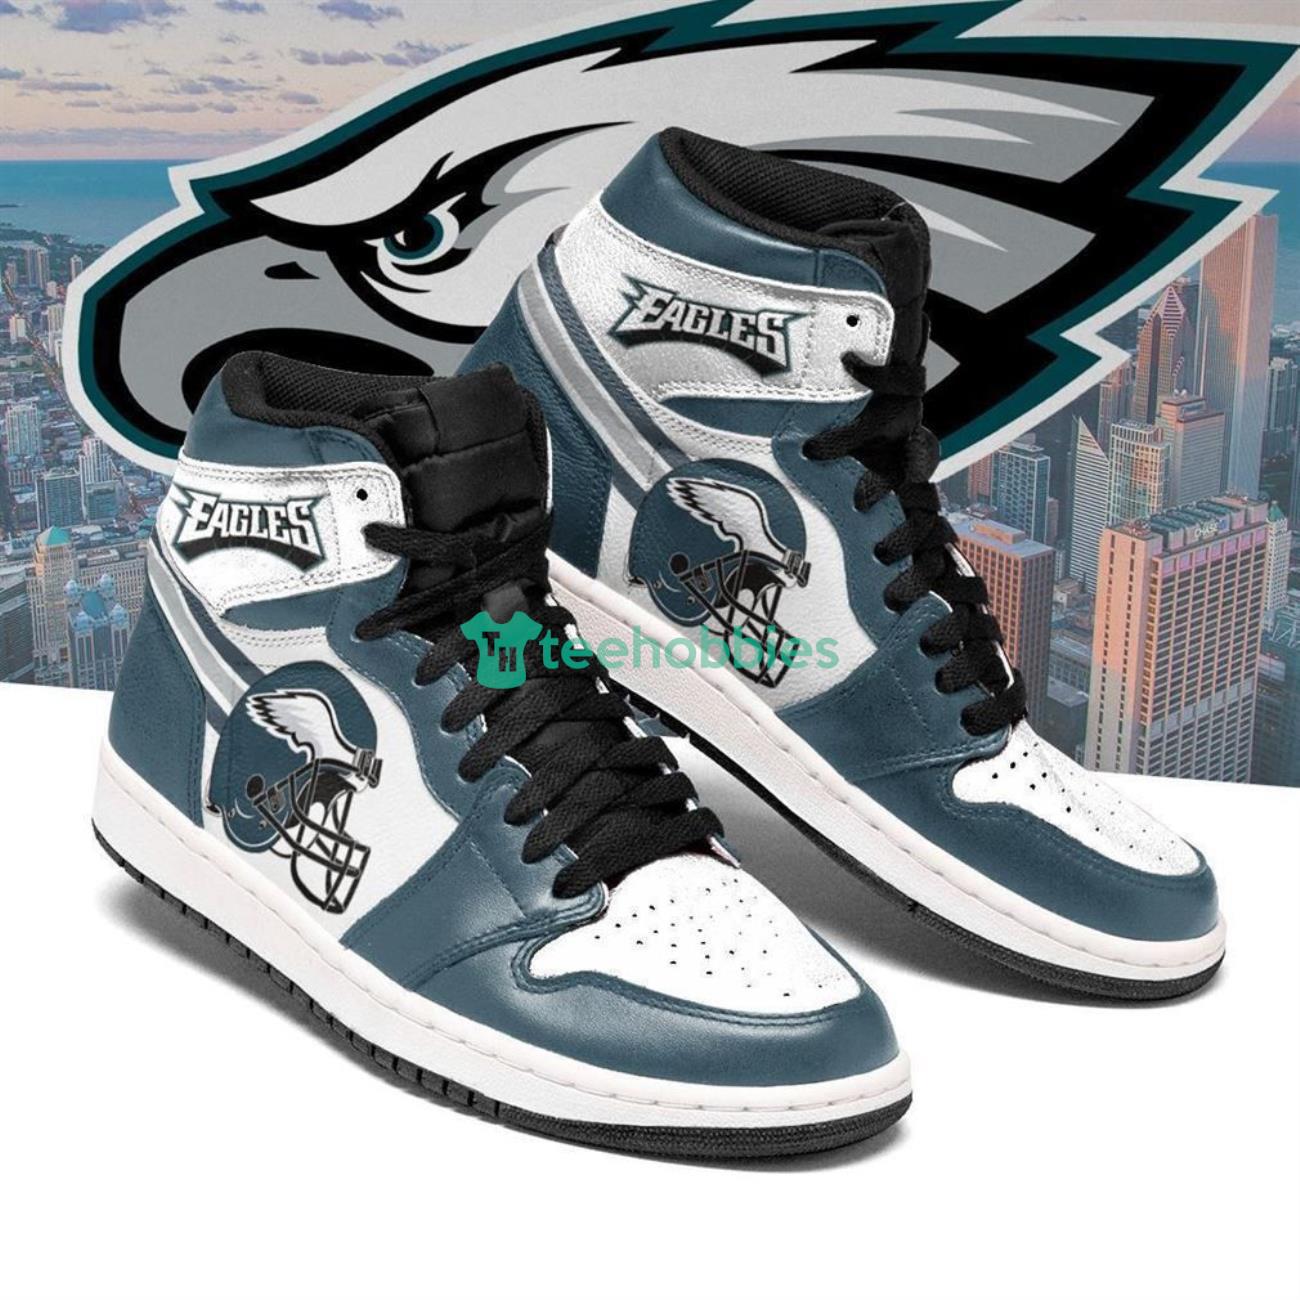 Philadelphia Eagles Team Air Jordan Hightop Shoes Product Photo 1